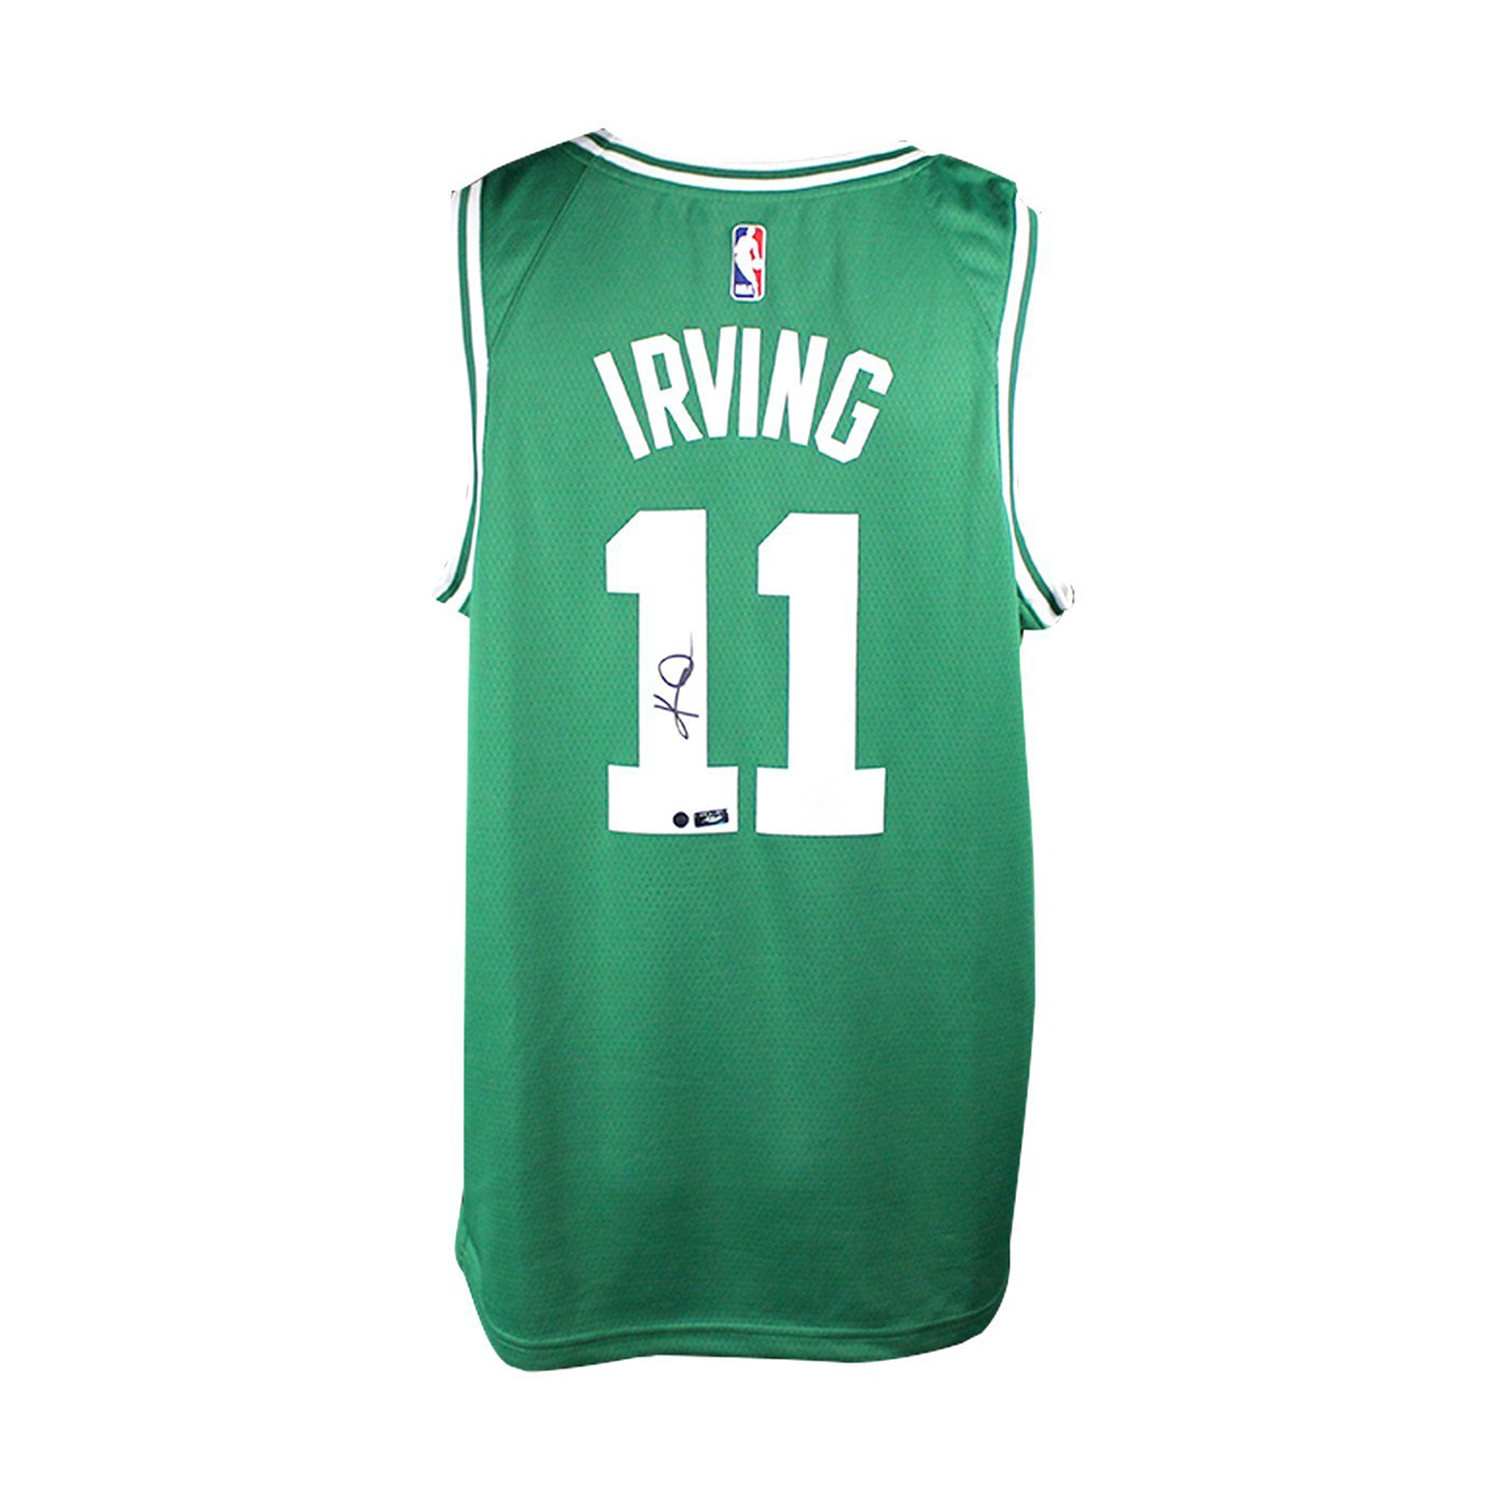 Signed Boston Celtics Swingman Jersey 